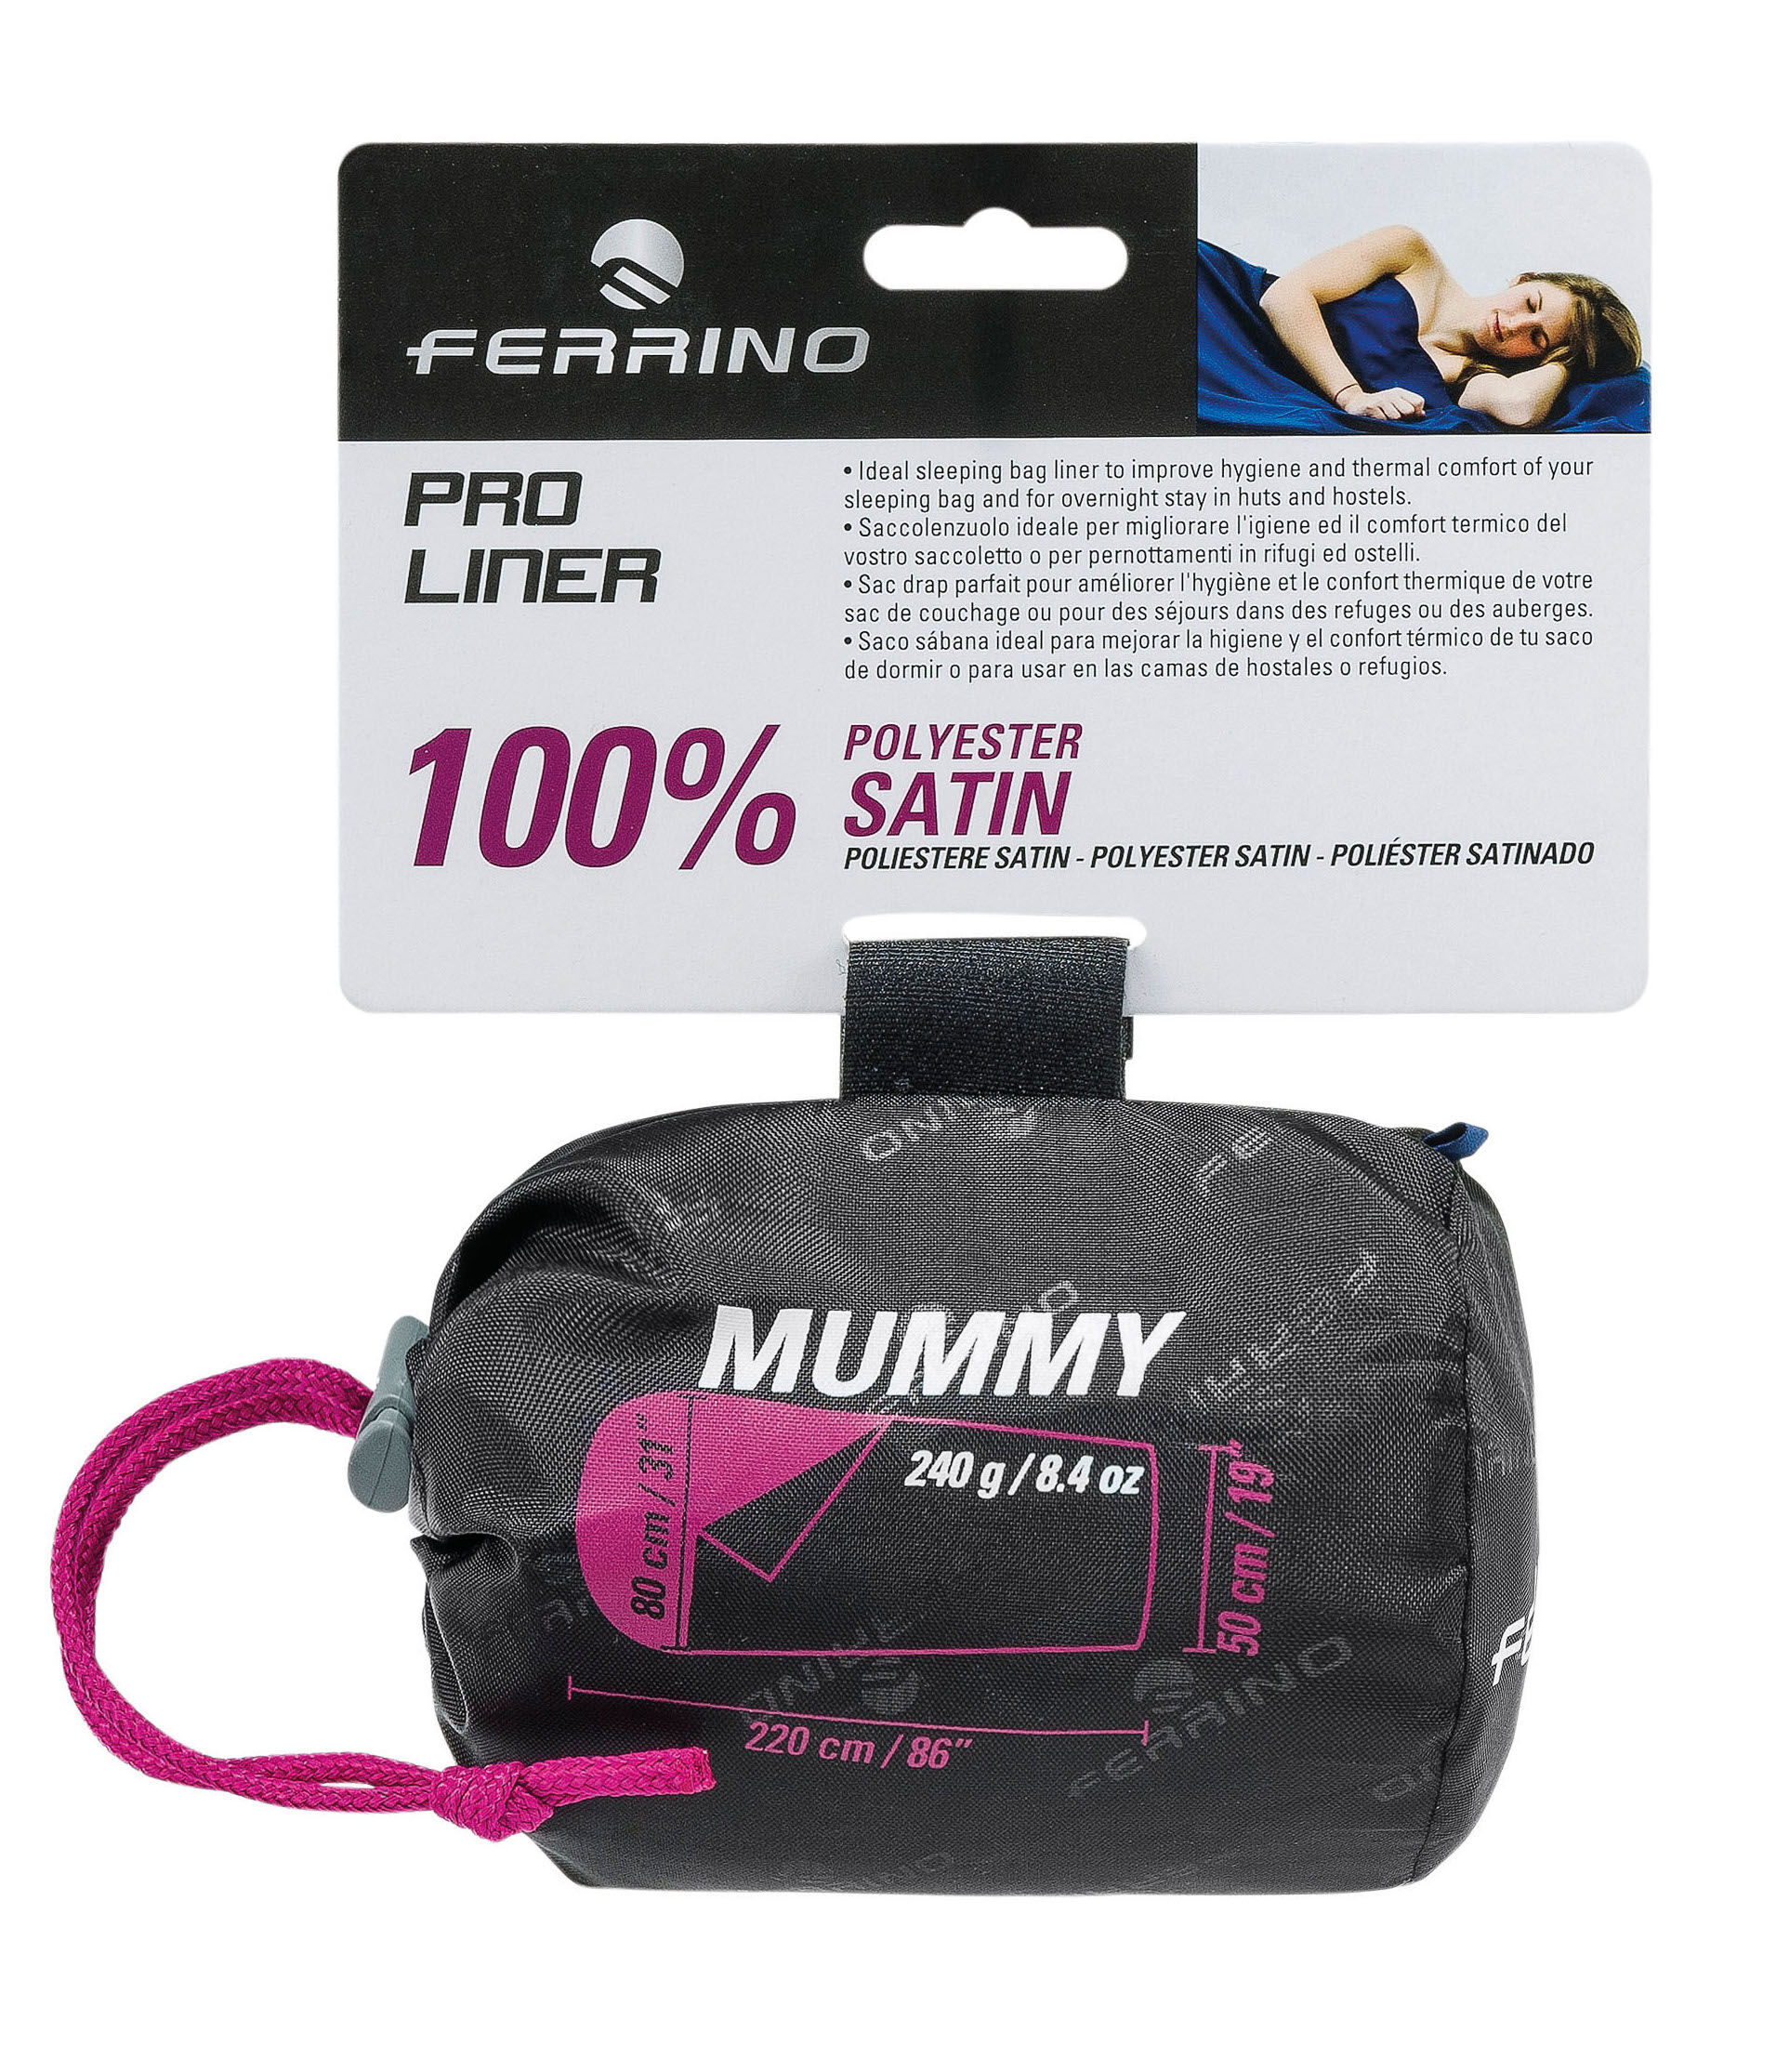 Ferrino Pro Liner Mummy - Reselakan